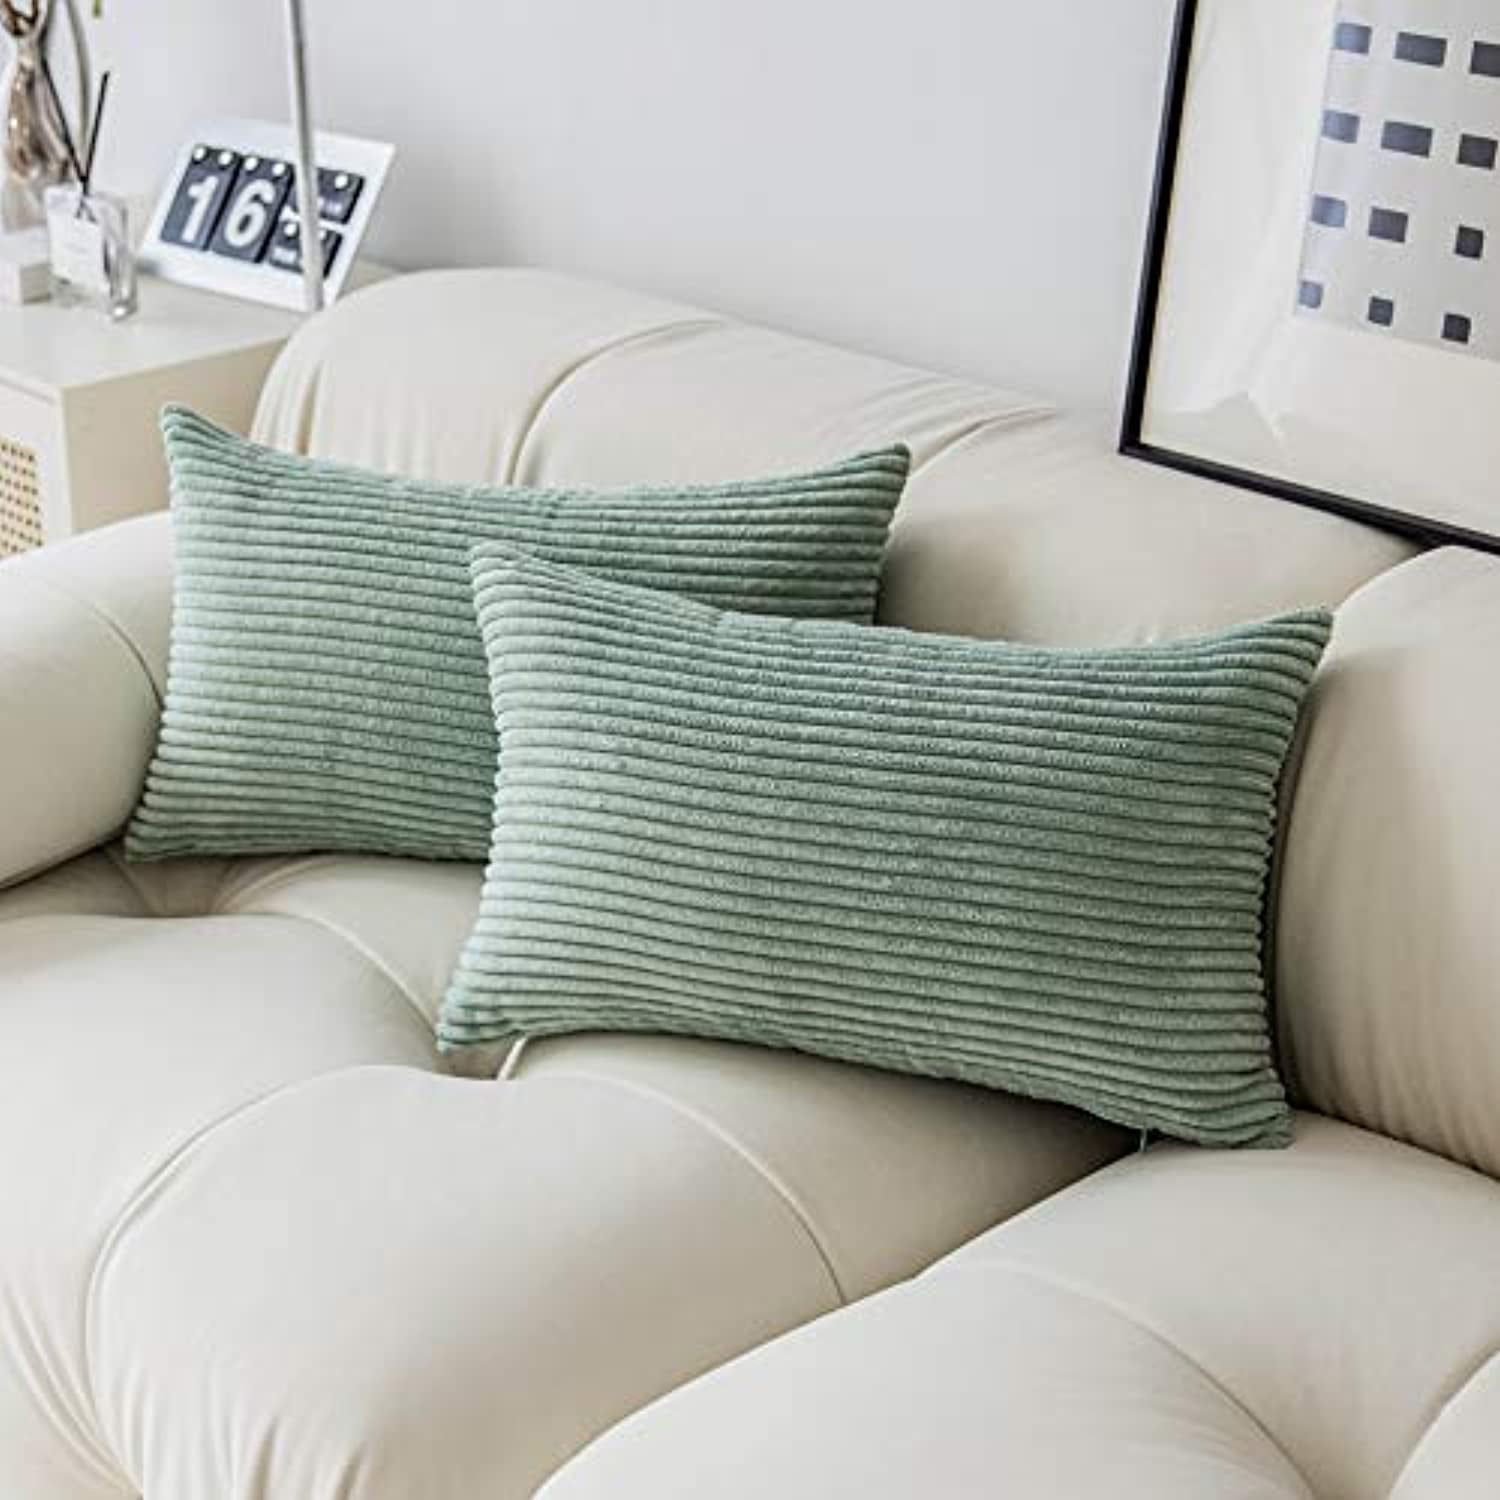 Black 12x20 inch Demetex Black Pillow Covers 12x20 Velvet Pillow Covers Set of 2 Decorative Rectangle Lumbar Pillow Cover for Living Room Sofa